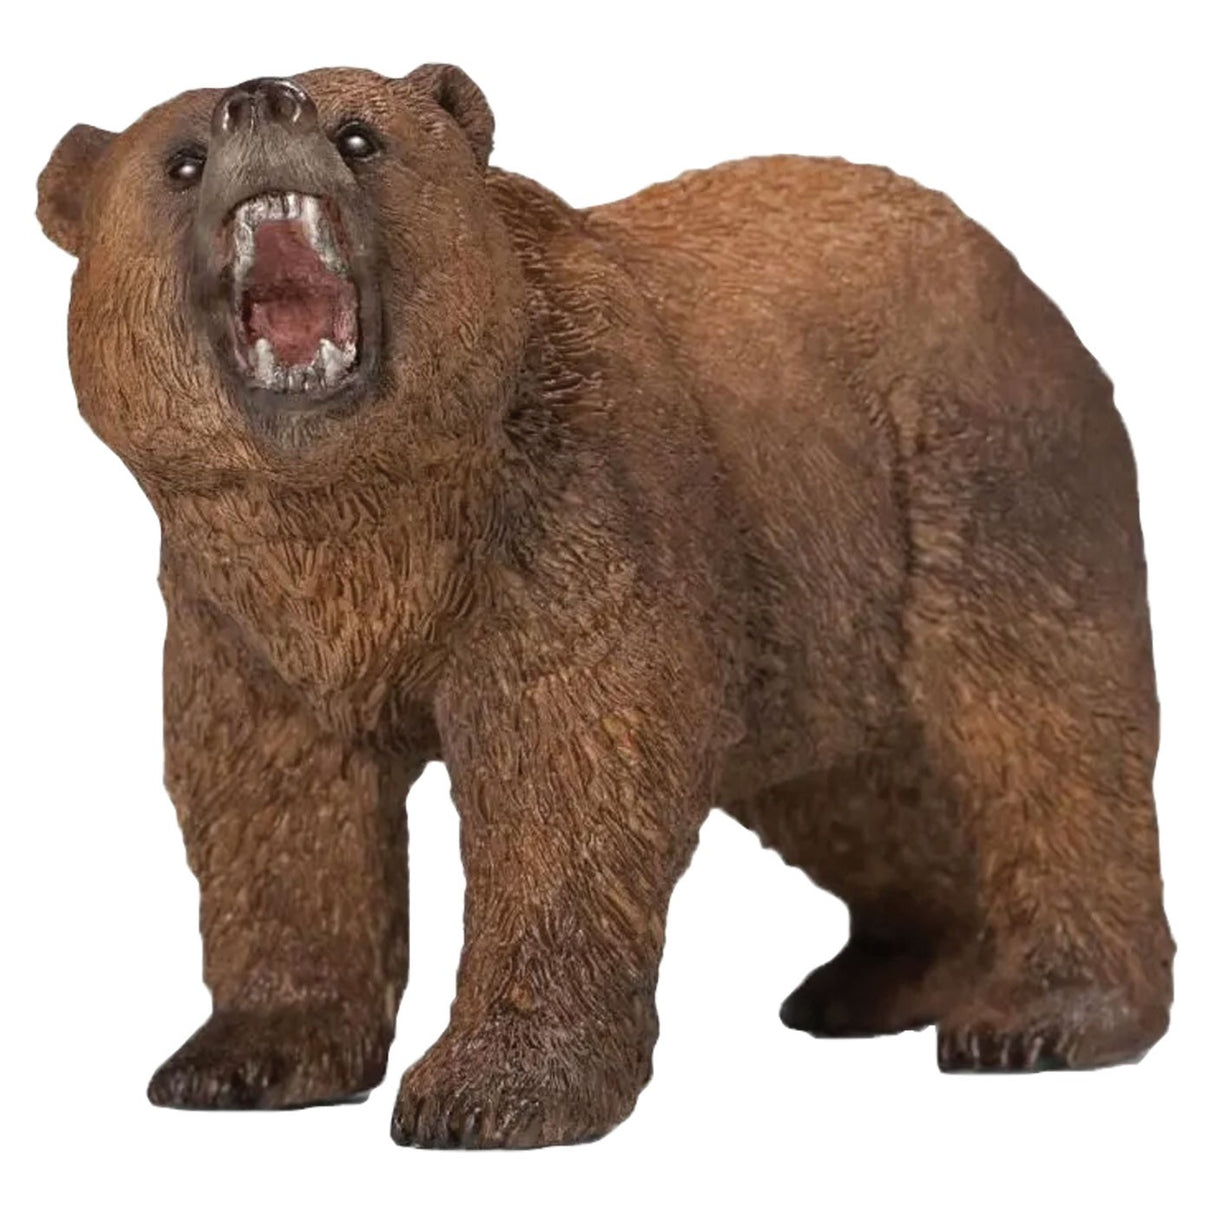 Schleich Wild Life Grizzly Bear